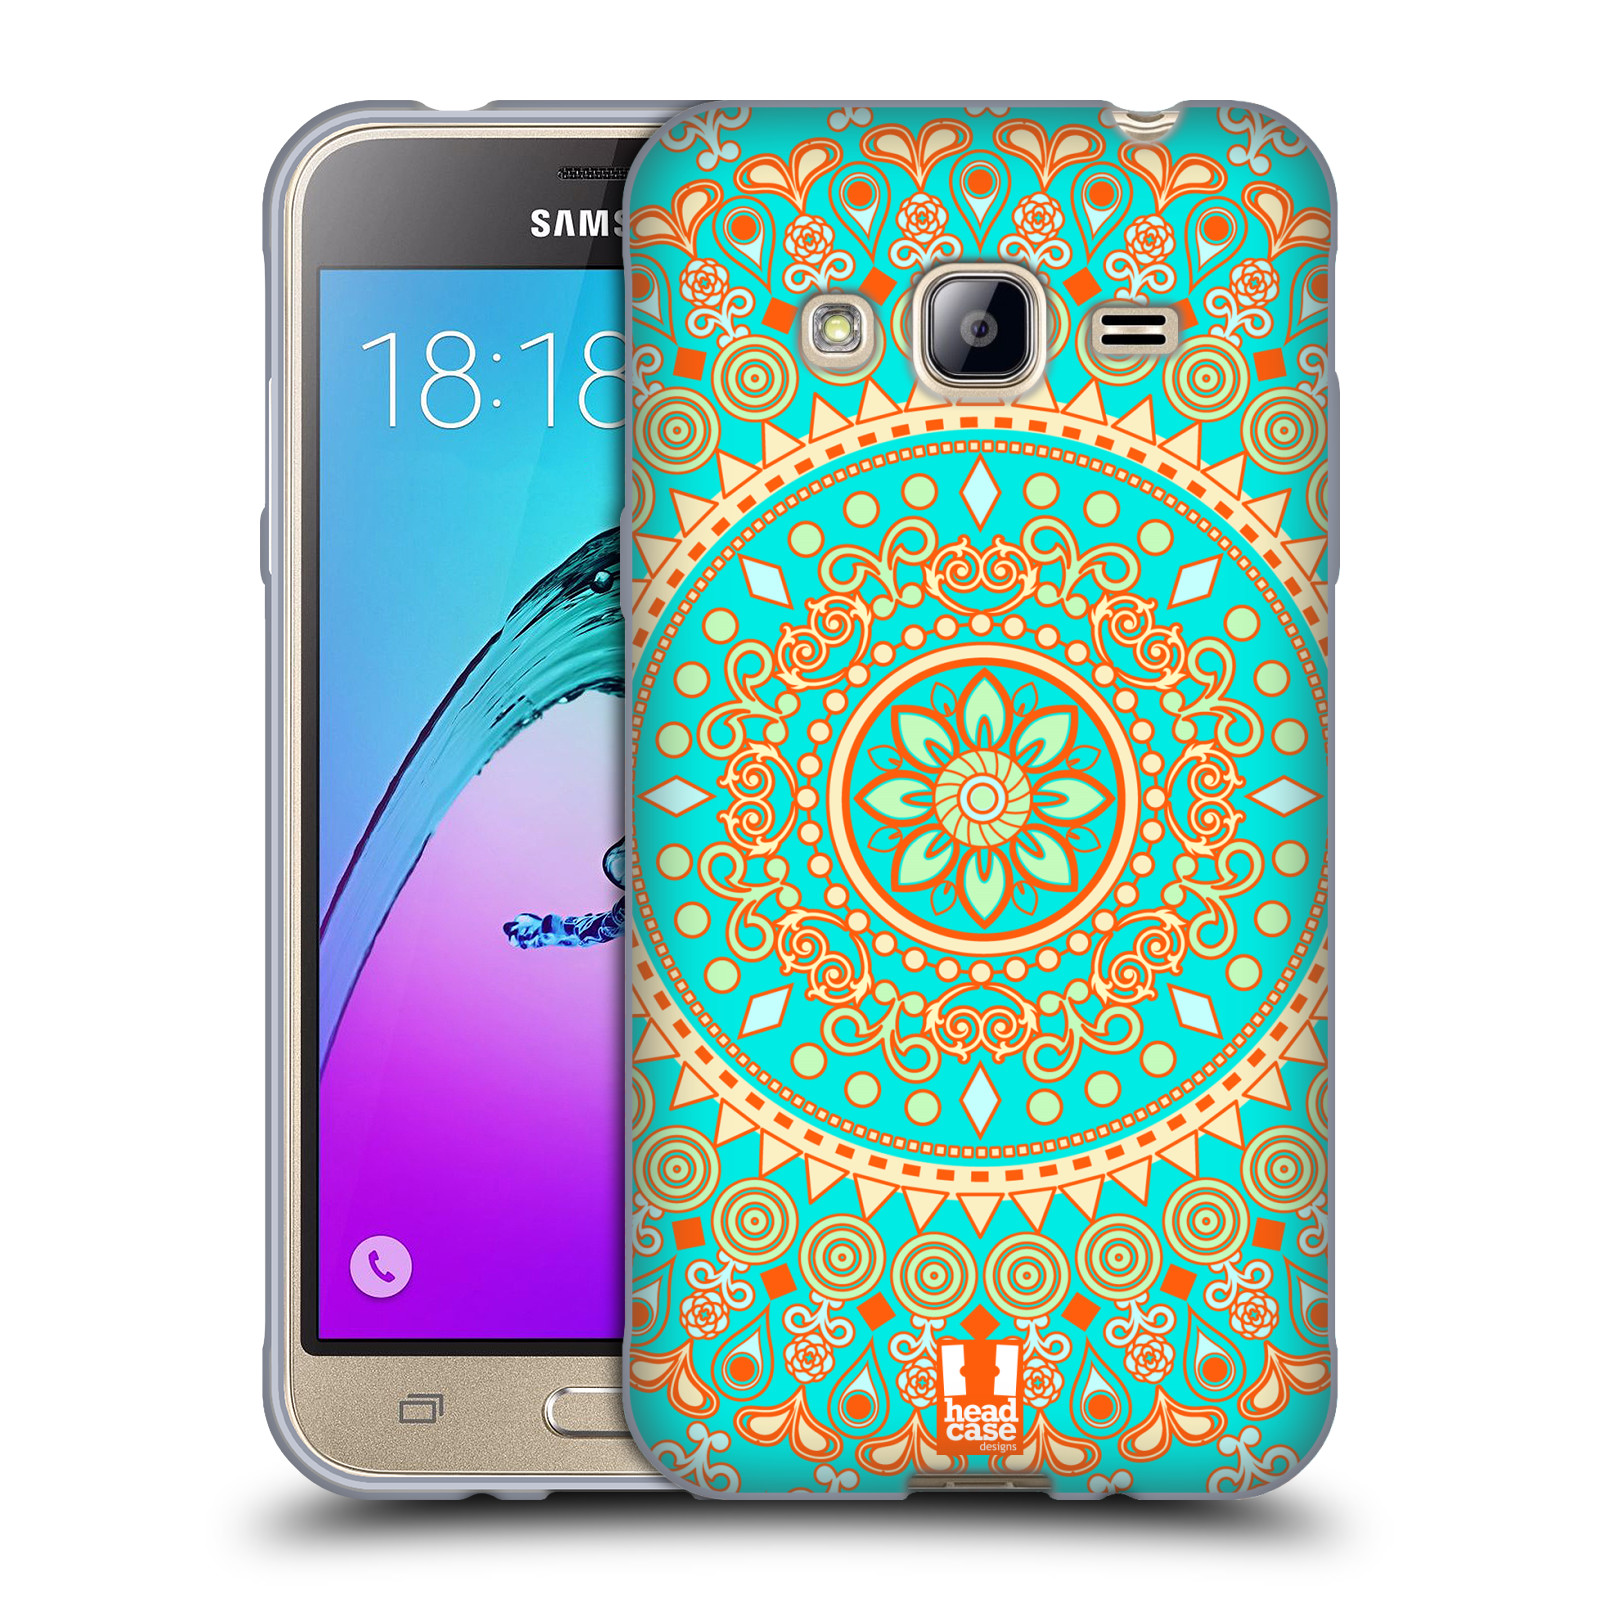 HEAD CASE silikonový obal na mobil Samsung Galaxy J3, J3 2016 vzor Indie Mandala slunce barevný motiv TYRKYSOVÁ, ZELENÁ